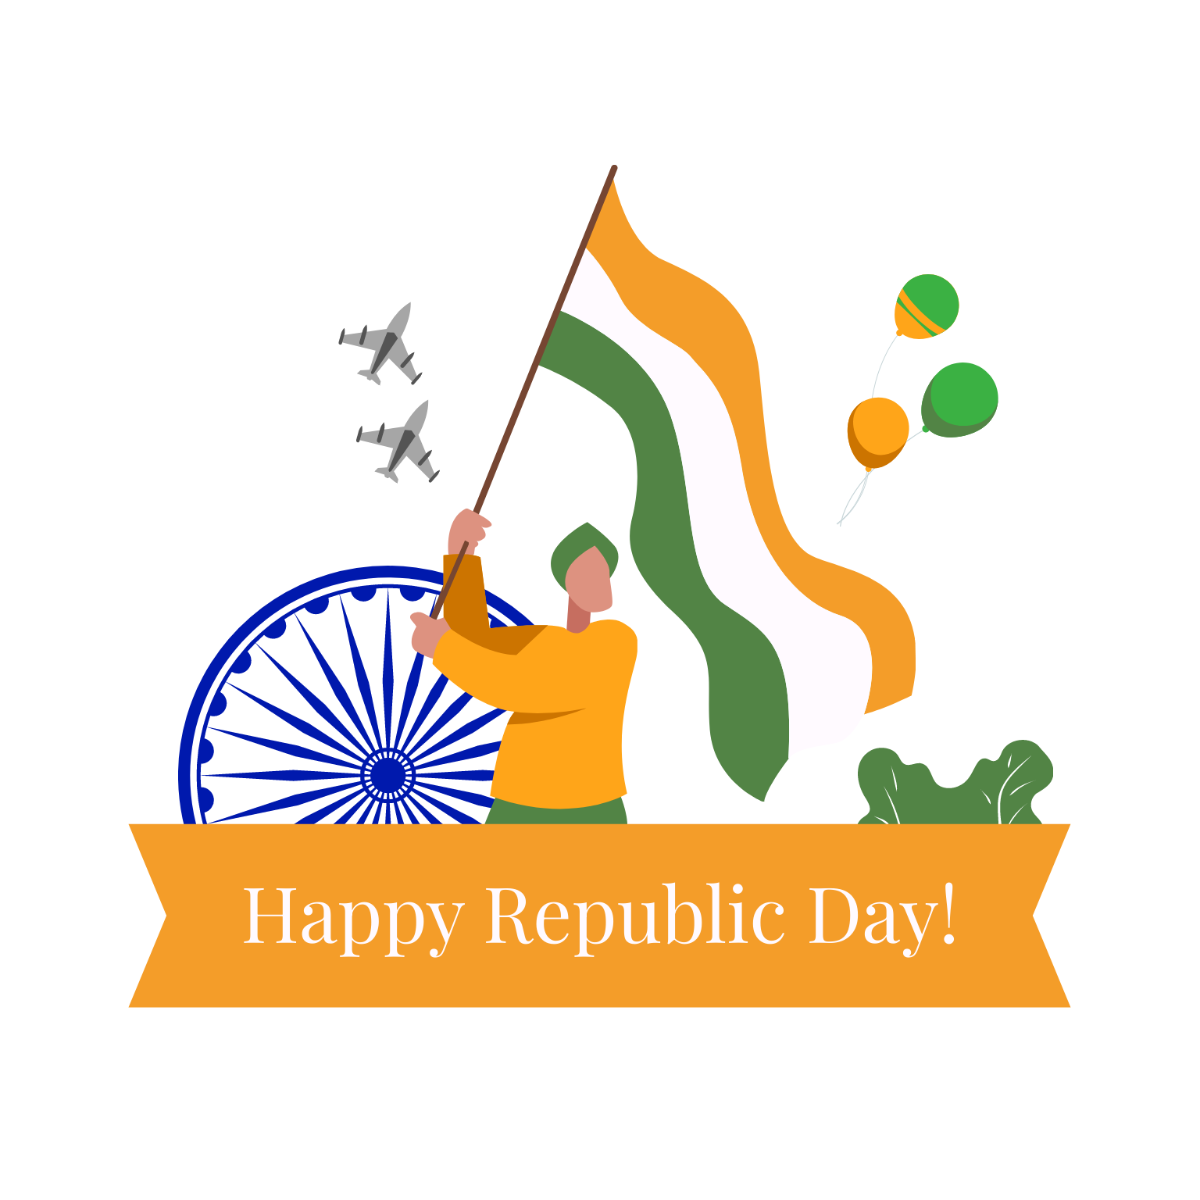 Happy Republic Day Illustration Template